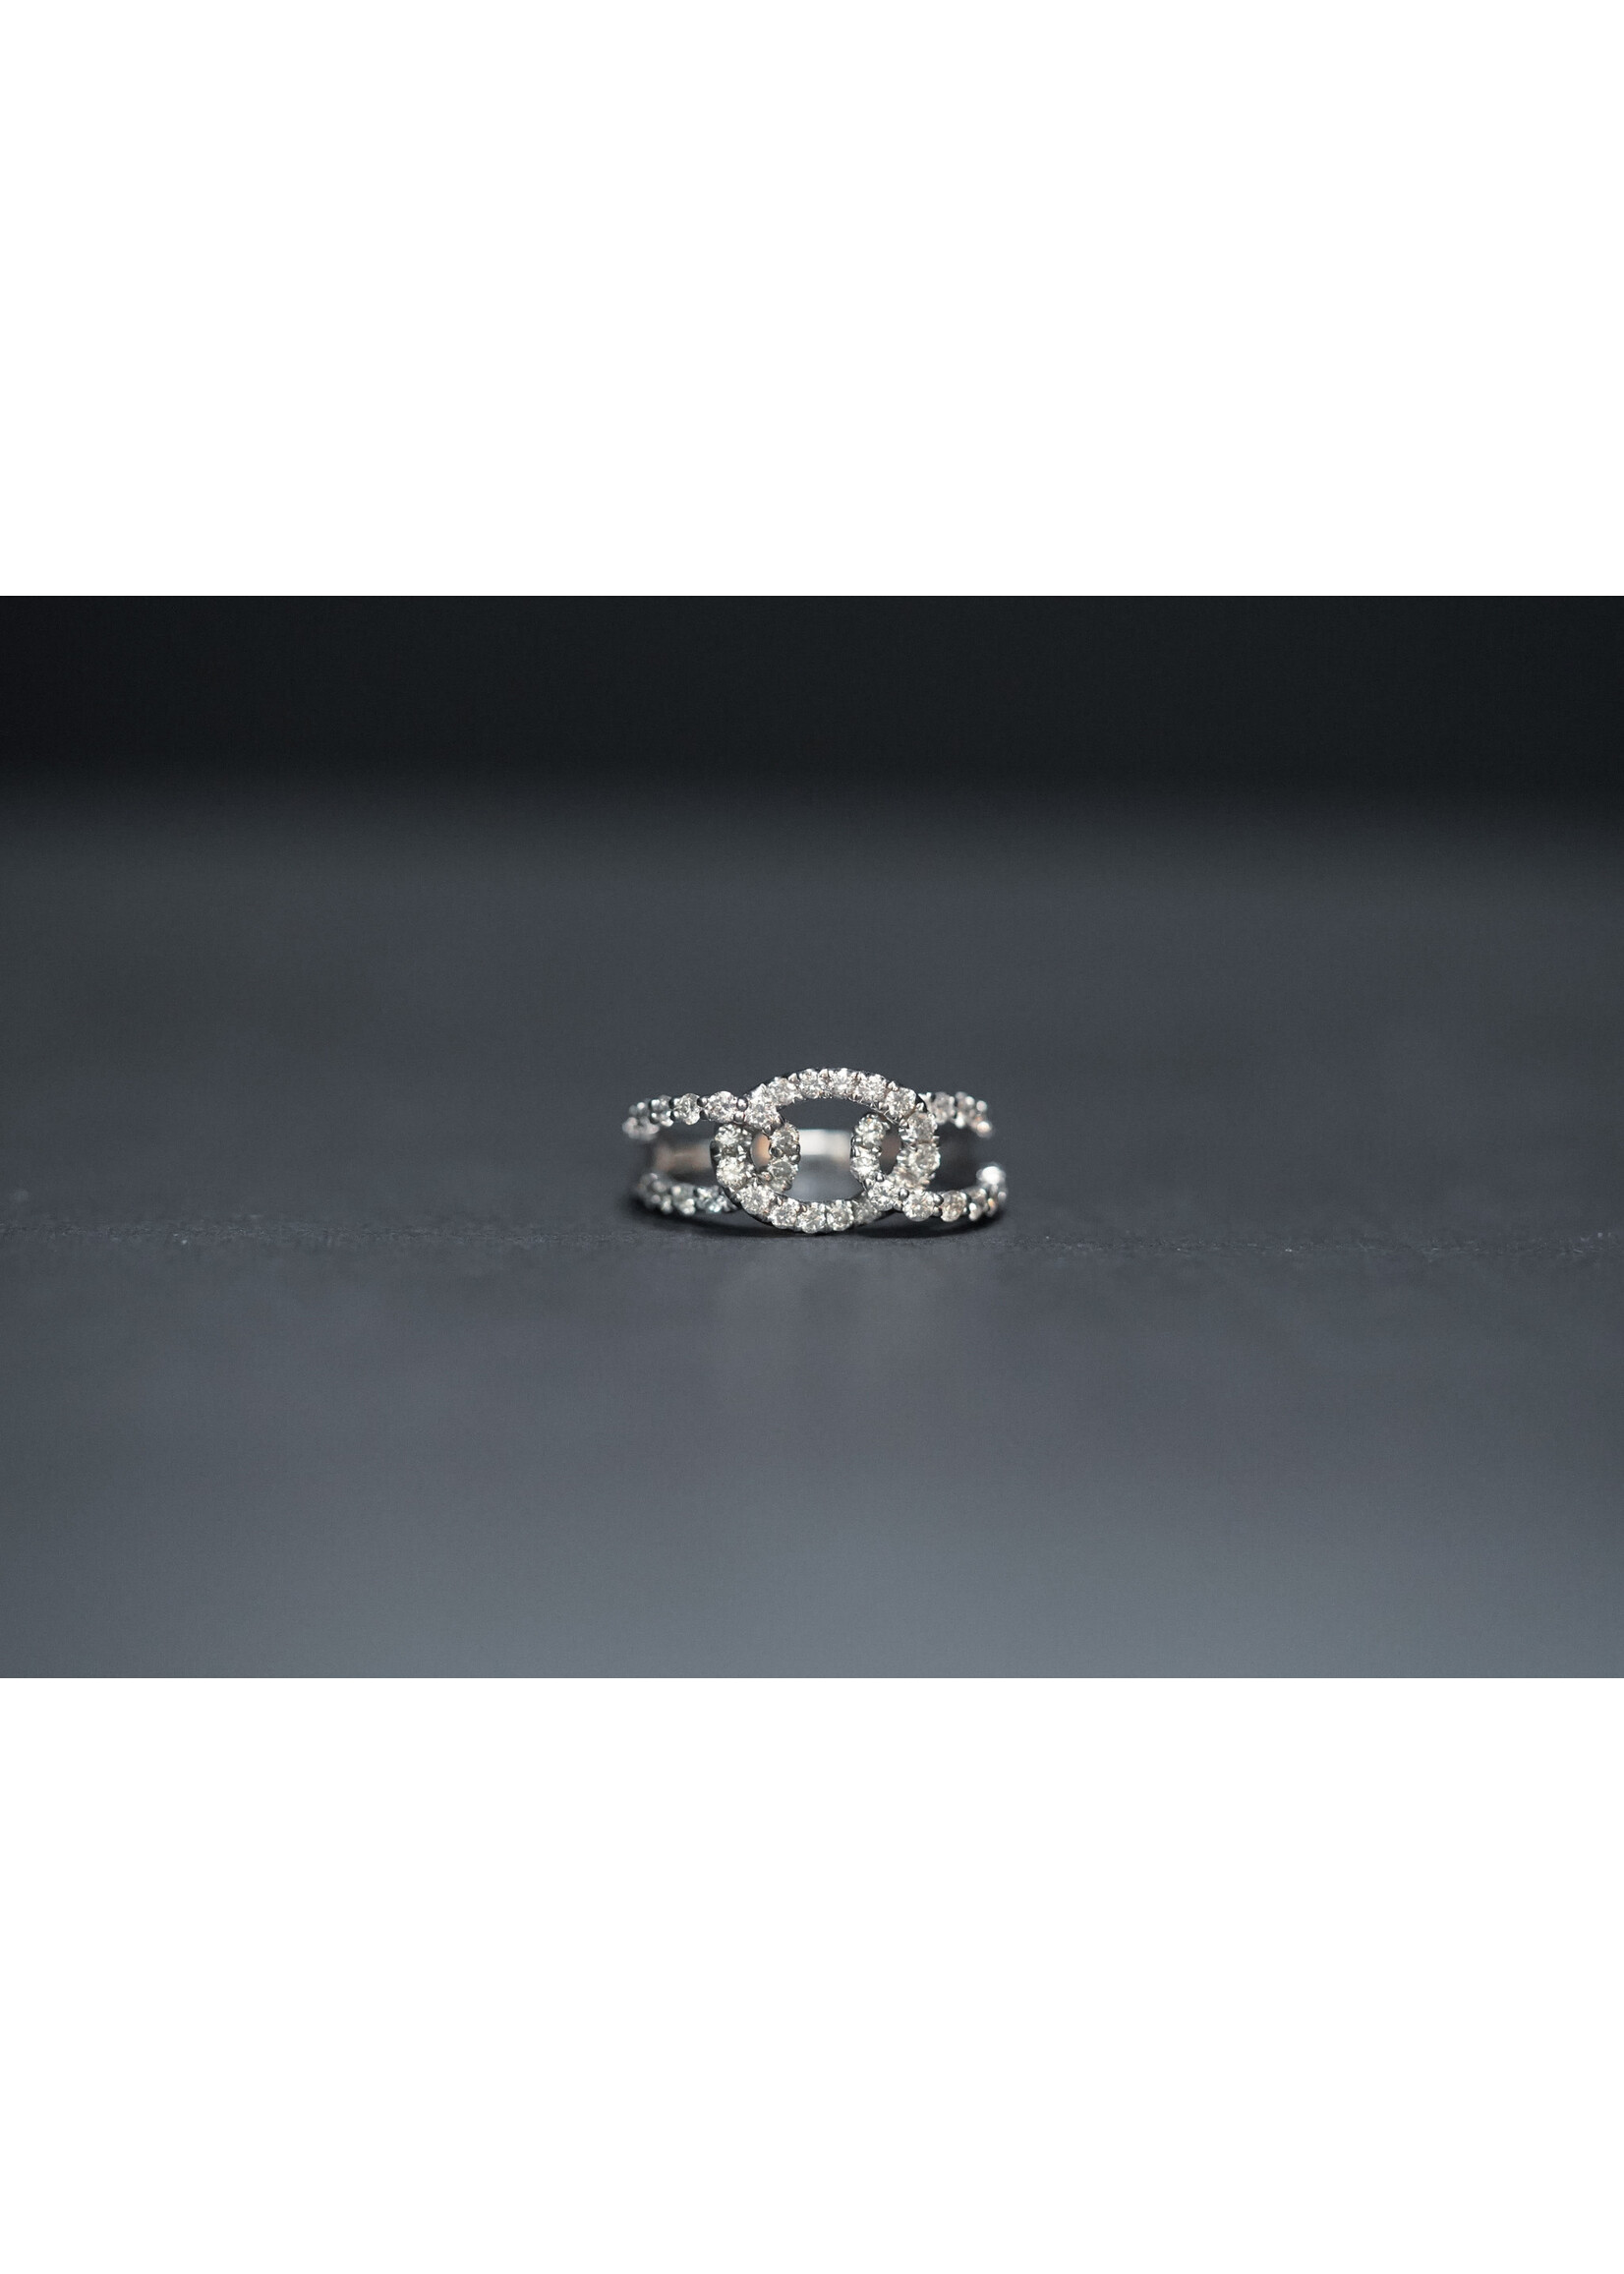 ETTX- 14KW 3.58g .86ctw Diamond Fashion Crossover Ring (size 7)